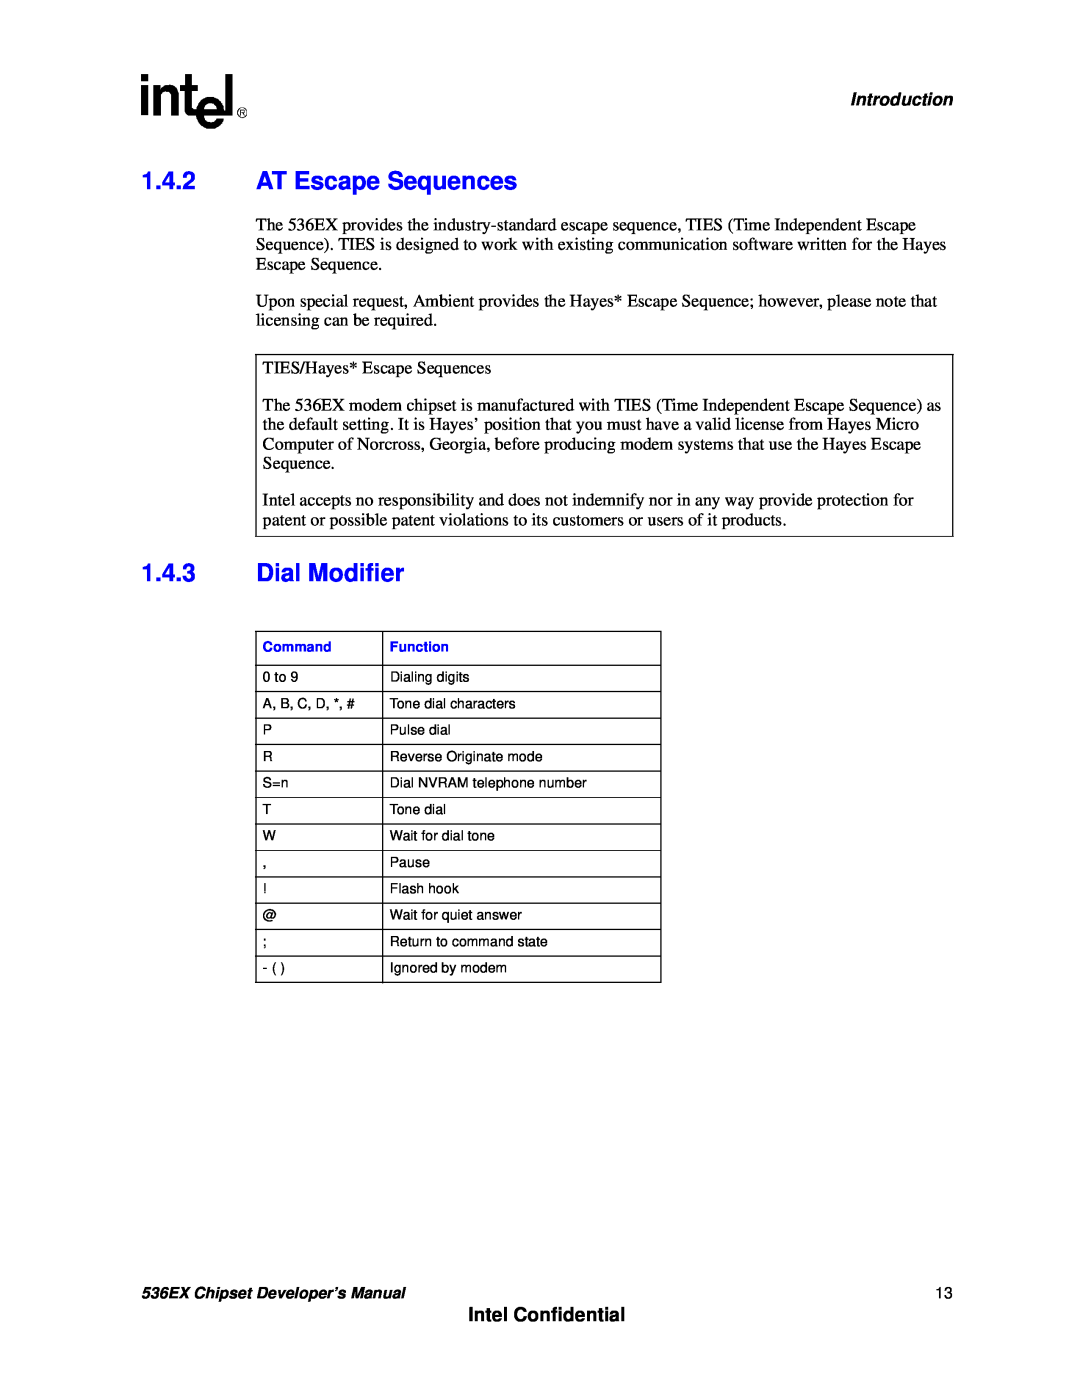 Intel 536EX manual 1.4.2AT Escape Sequences, 1.4.3Dial Modifier, Intel Confidential, Introduction 